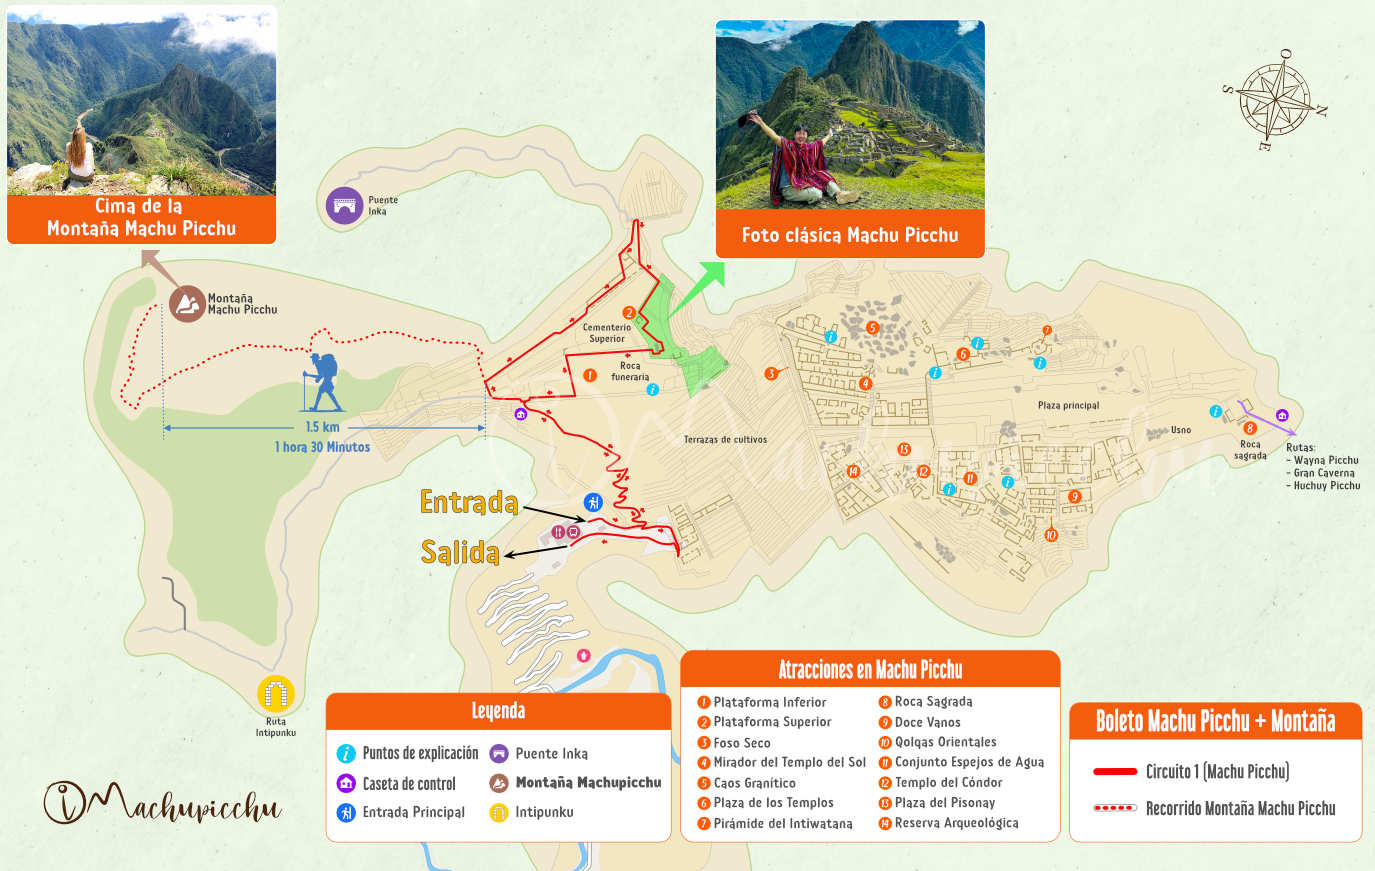 Mapa del circuito Machu Picchu + Montaña